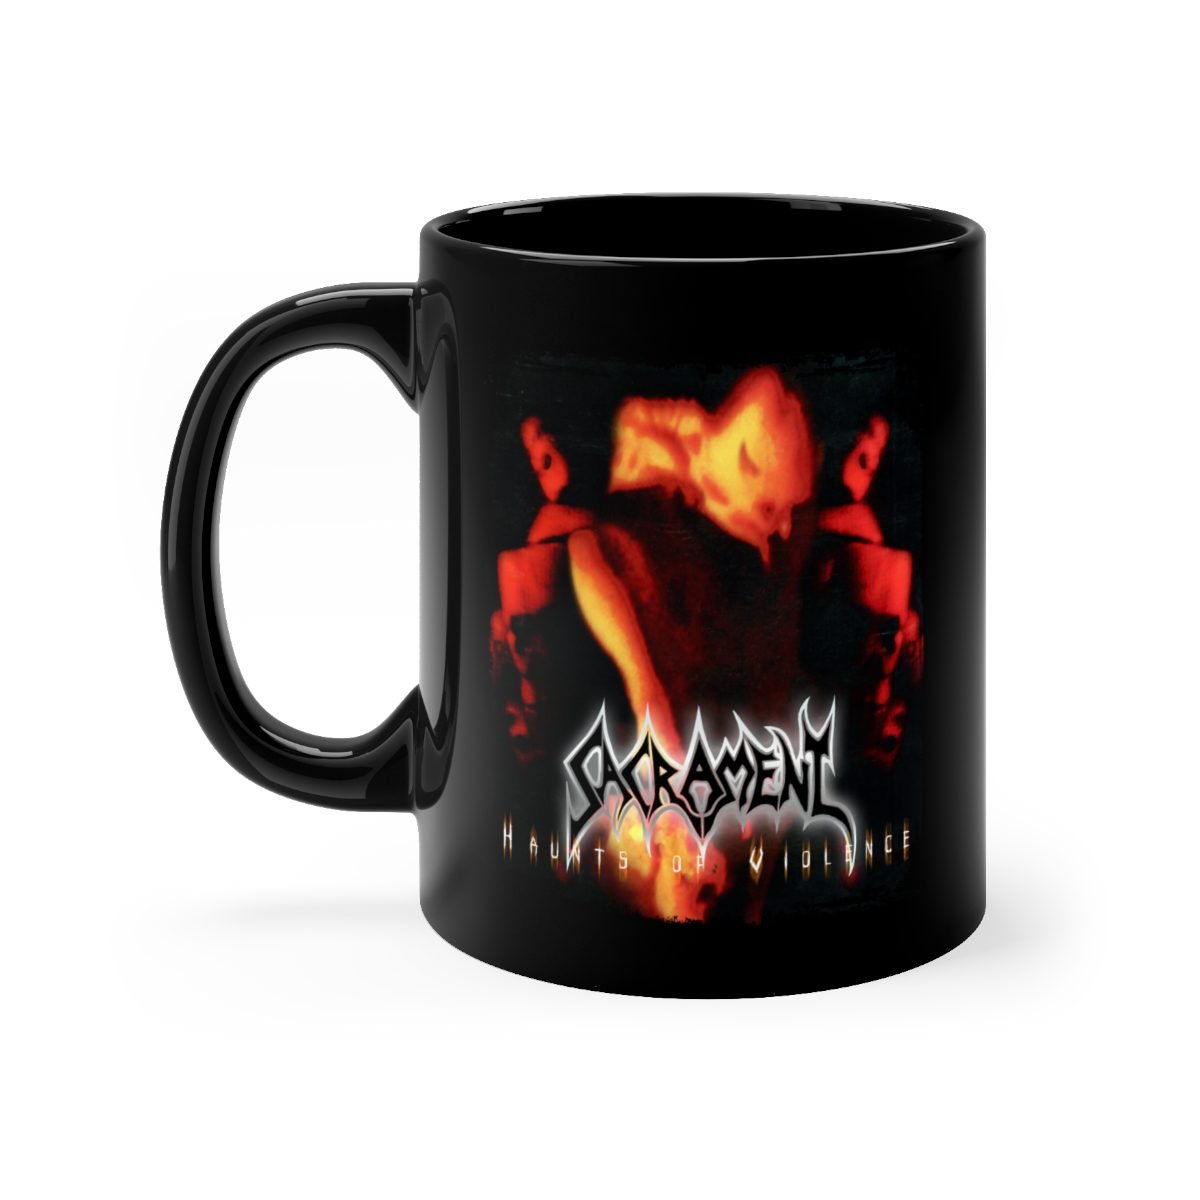 Sacrament – Haunts of Violence 11oz Black mug